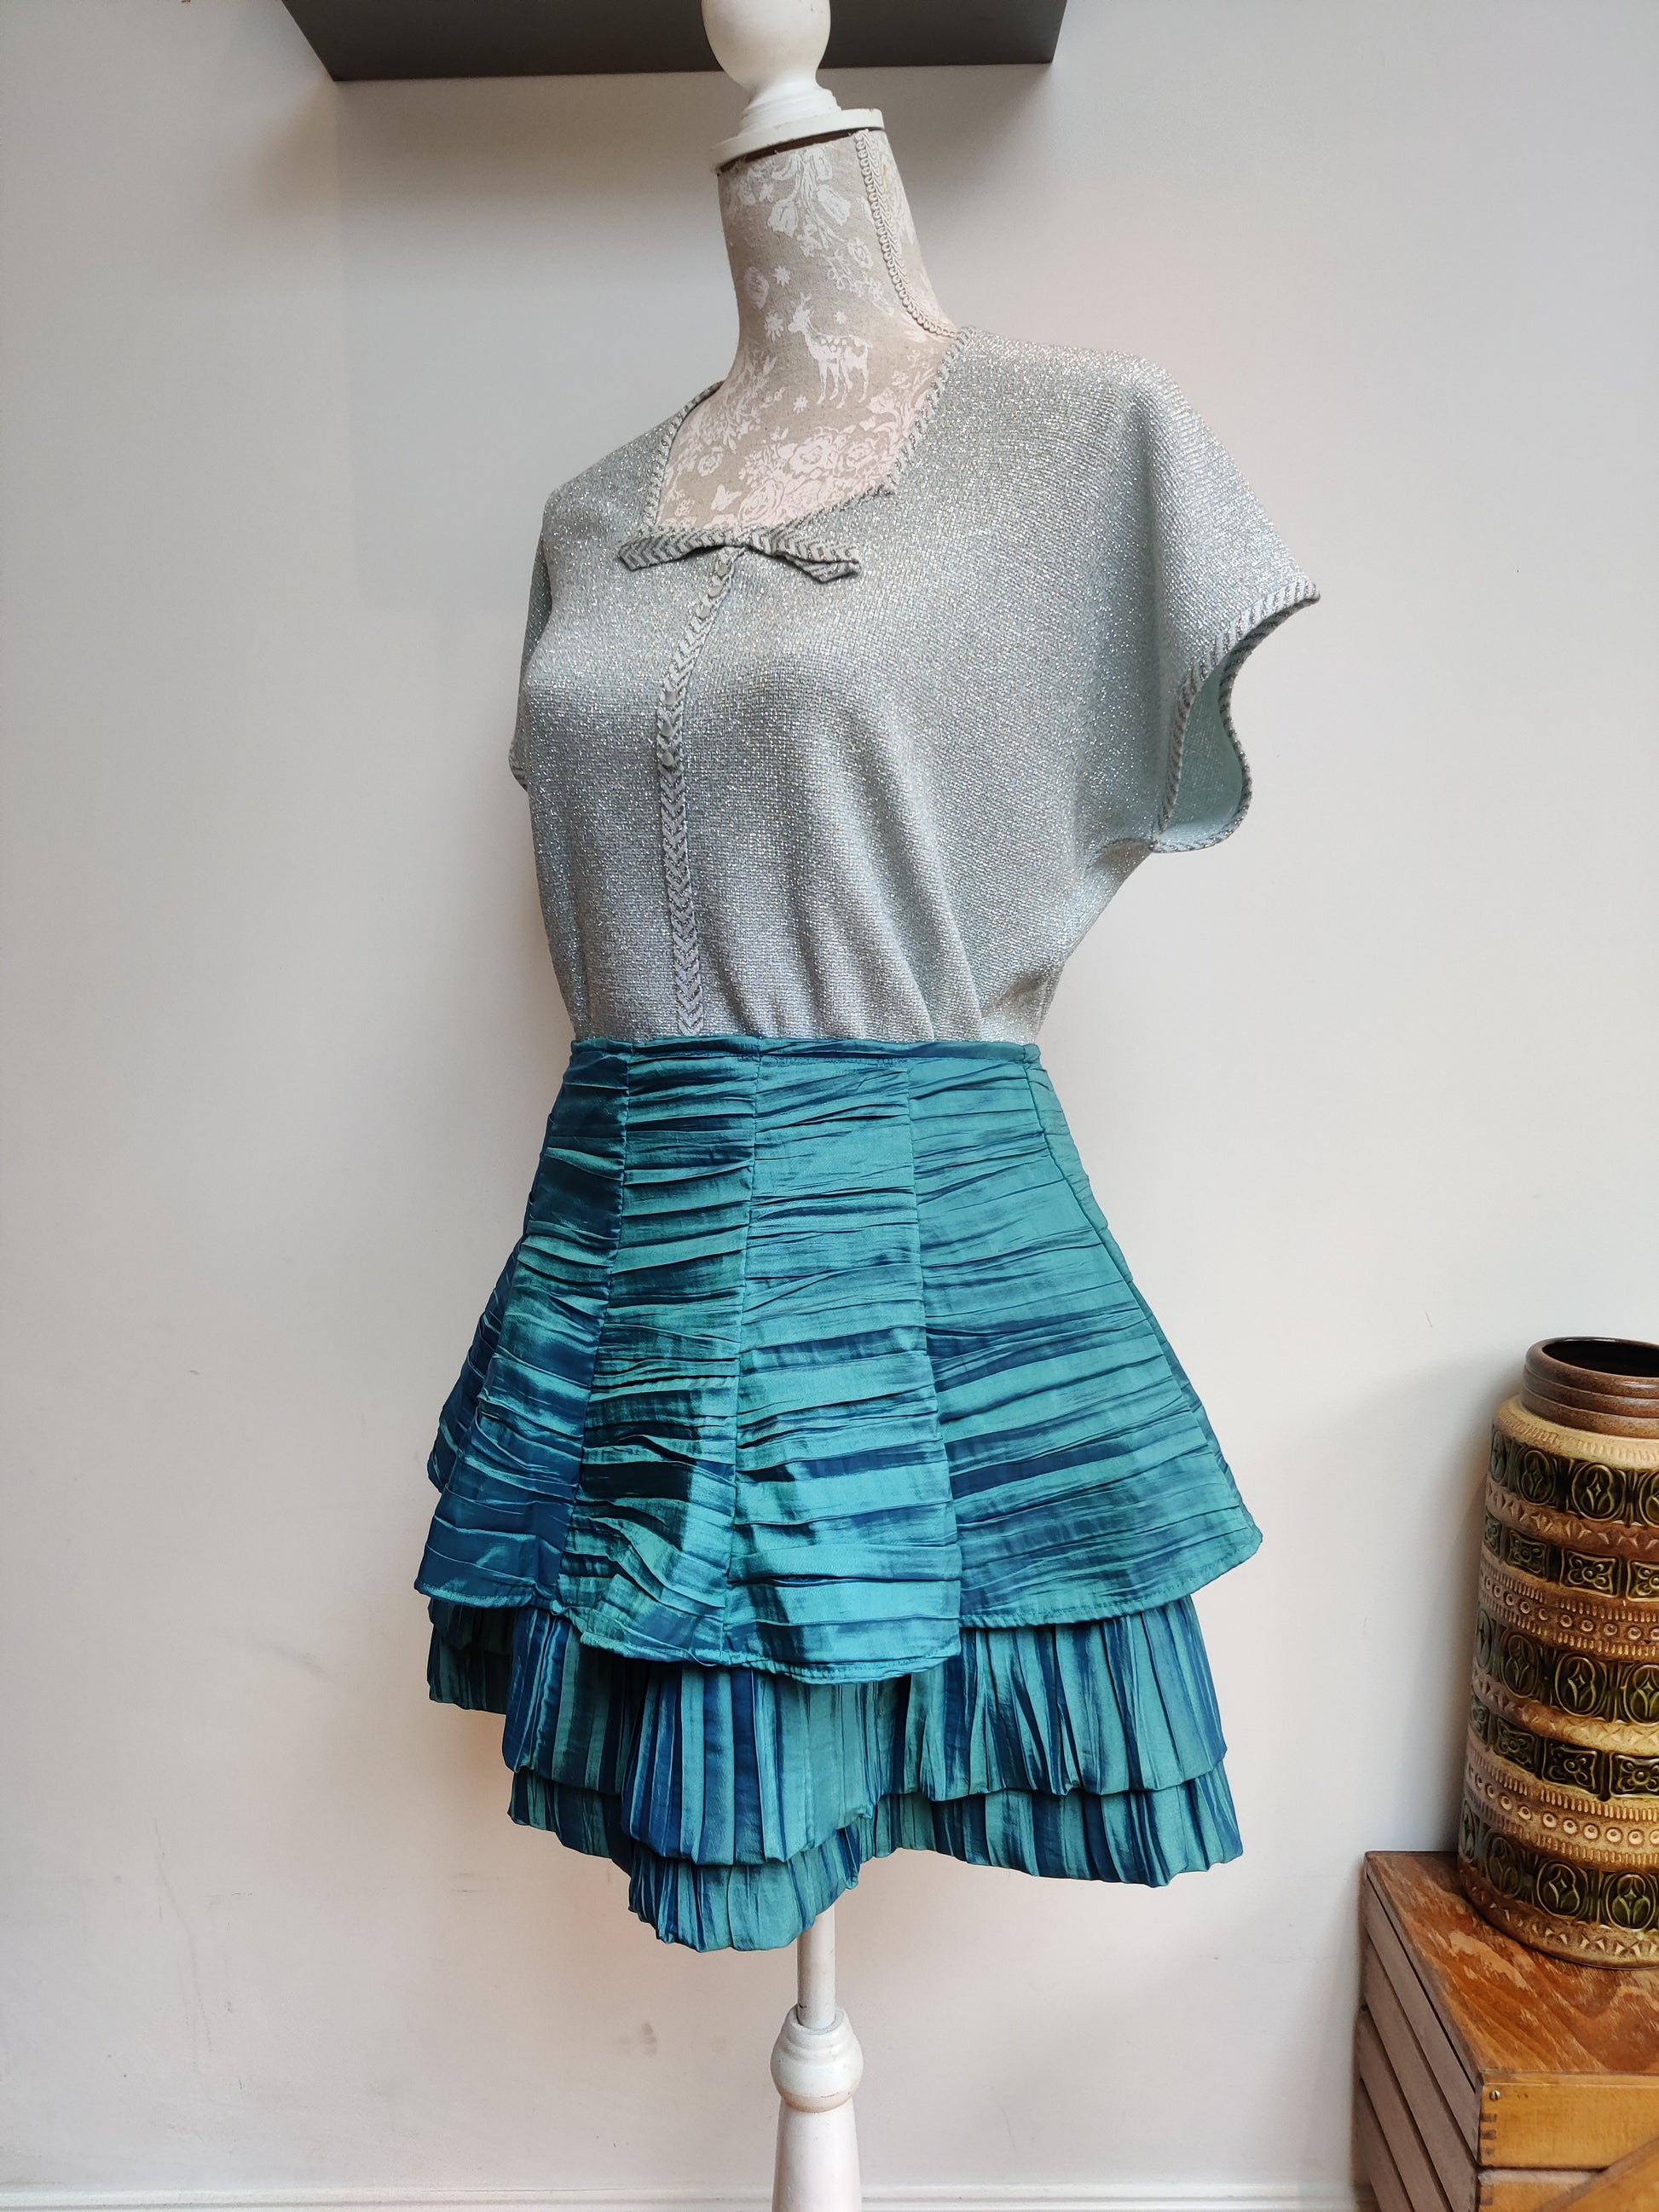 size 16-18 rara skirt vintage.